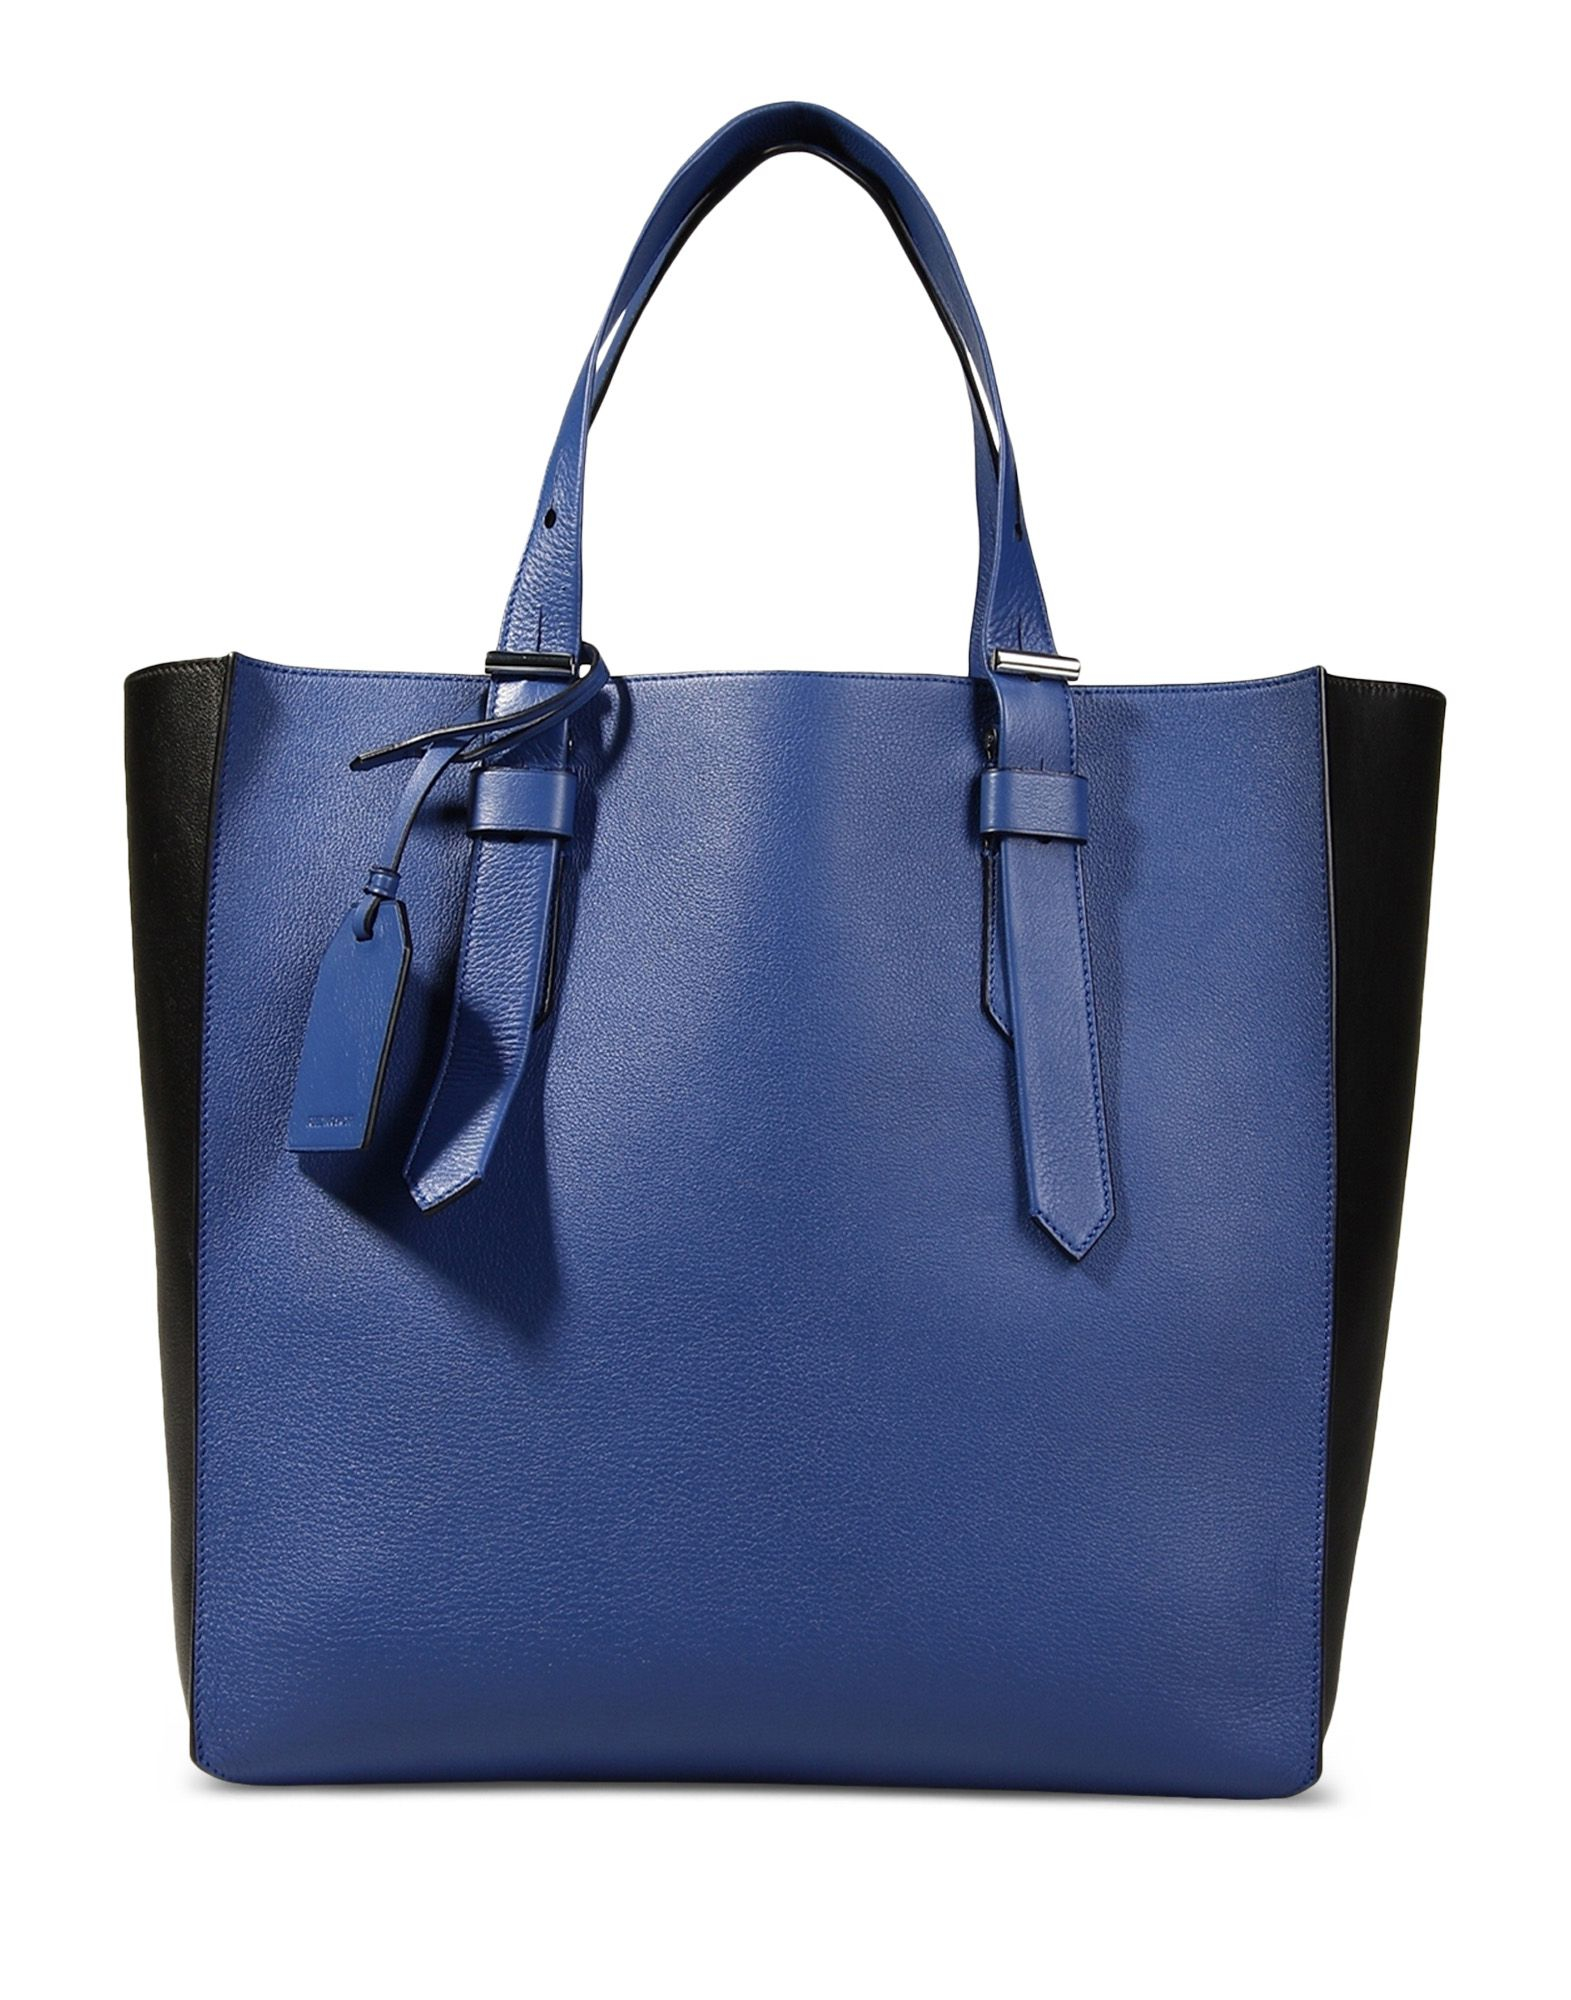 Reed krakoff Large Leather Bag in Blue (Black) | Lyst